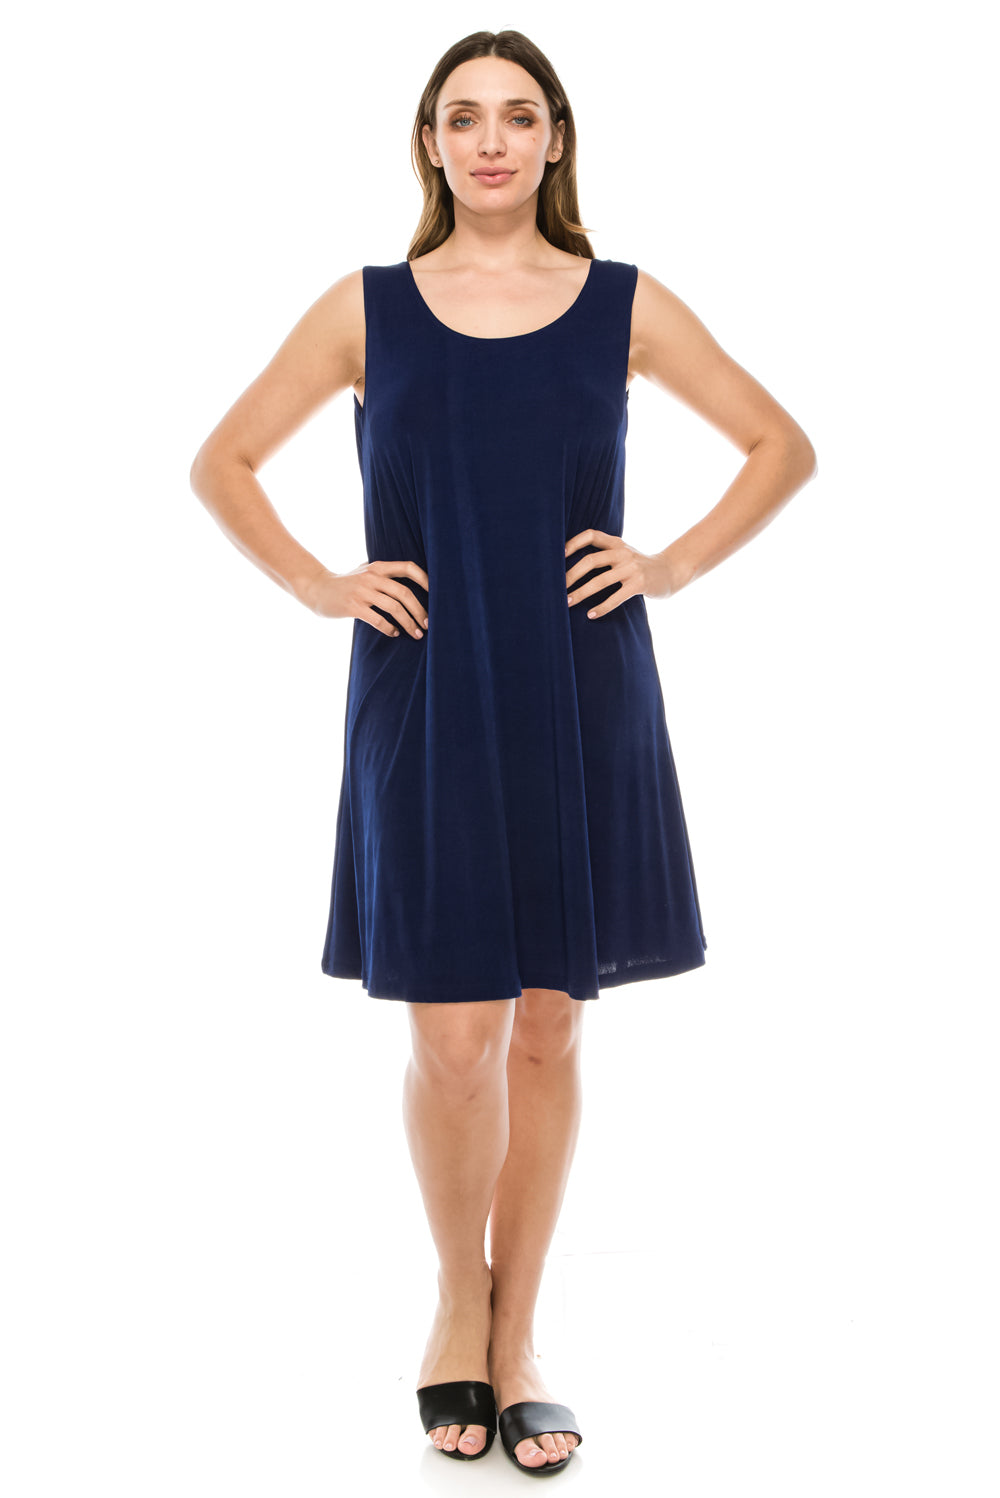 Jostar Women's Stretchy Short Tank Dress, 703BN-T - Jostar Online